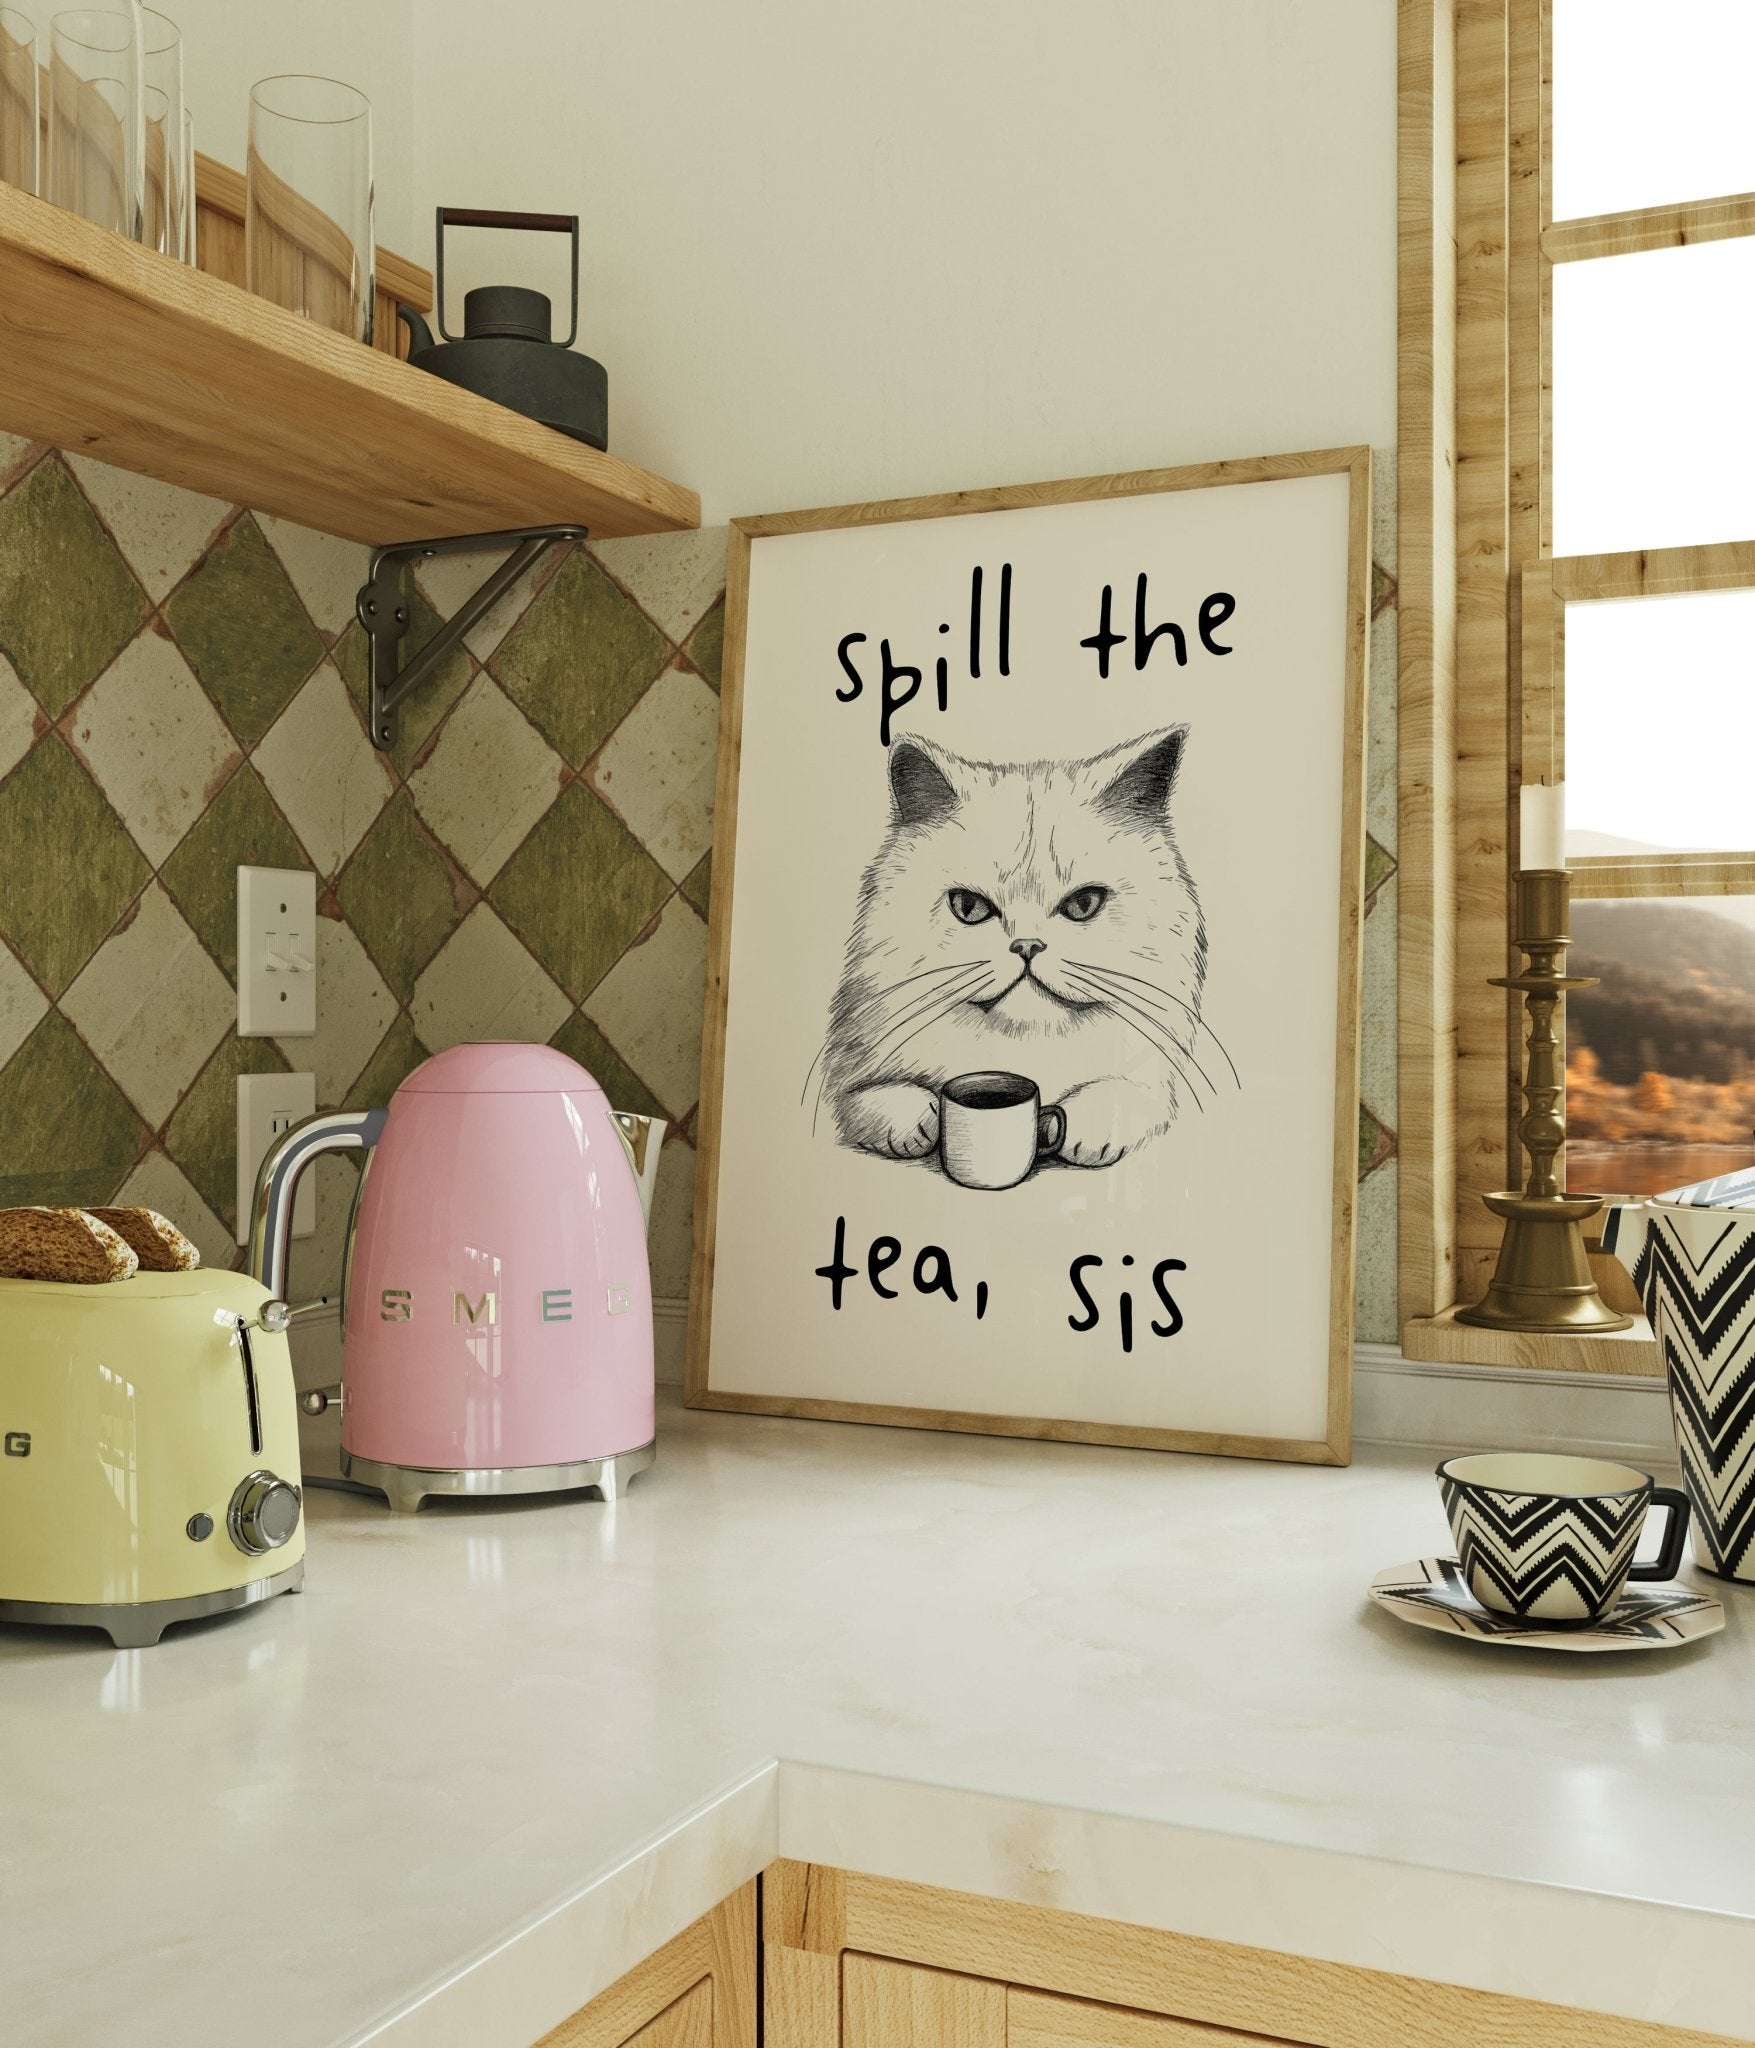 Spill the Tea Sis Print